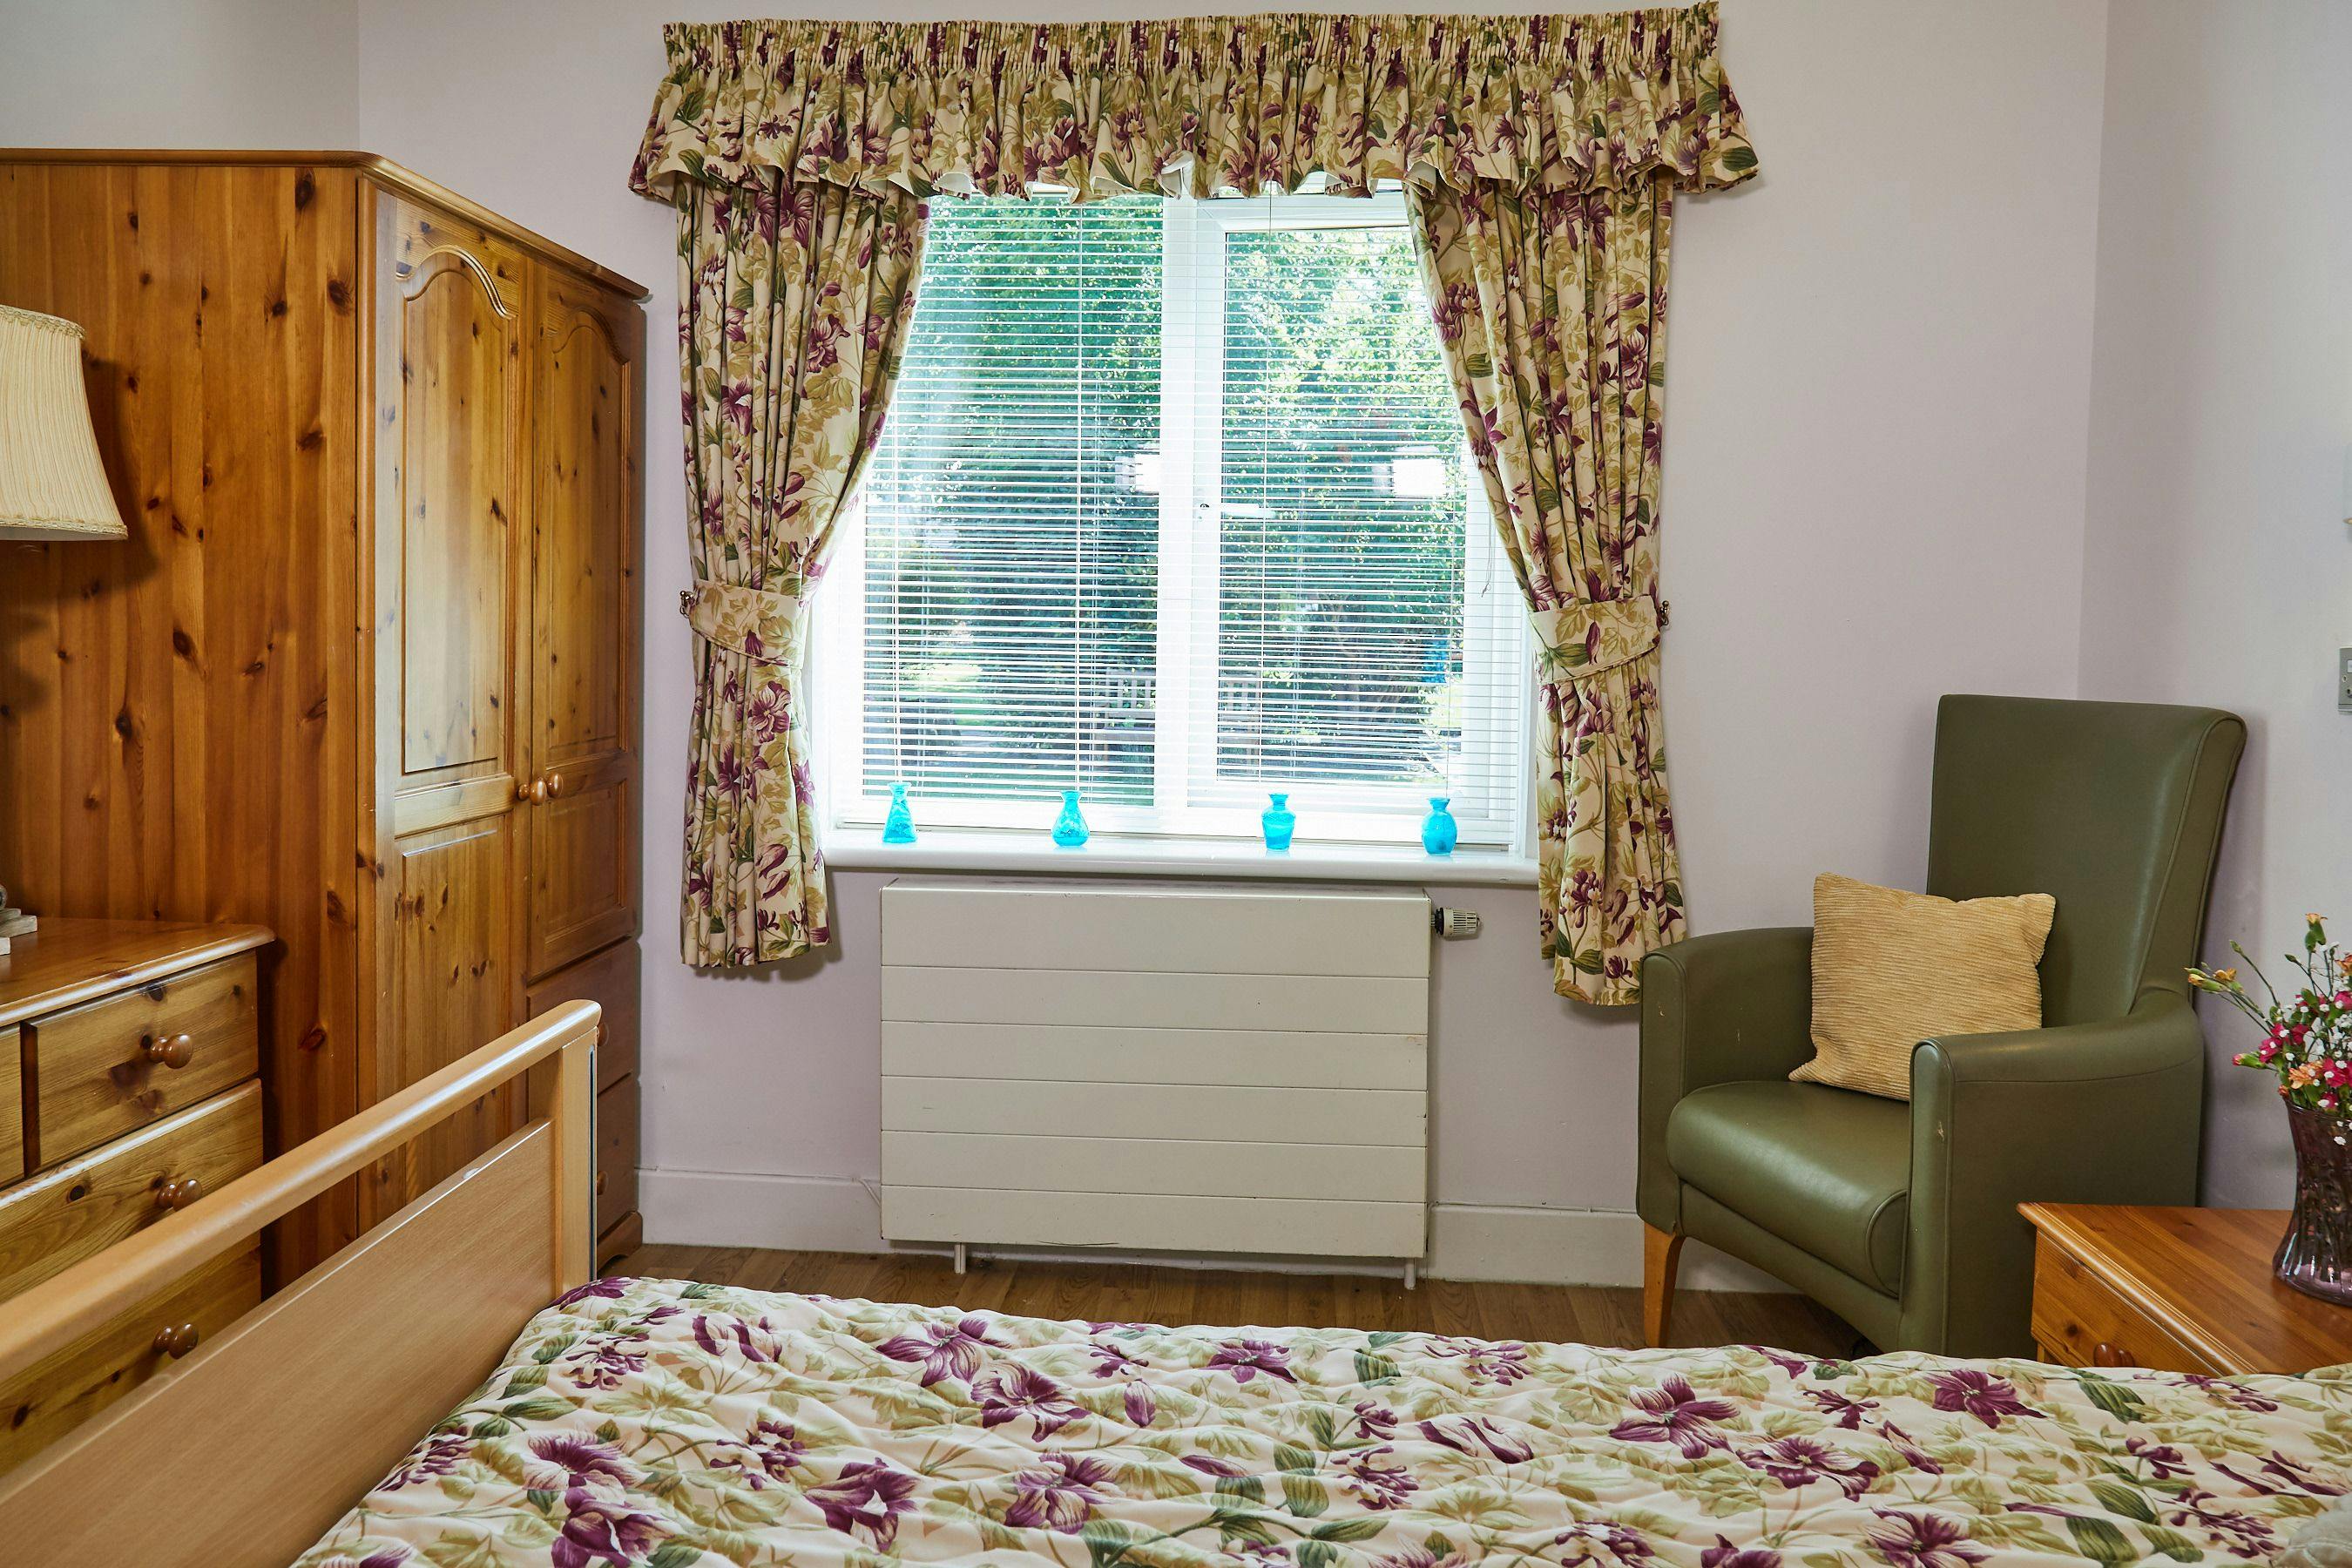 Bedroom of Newlands Care Home in Workington, Cumbria